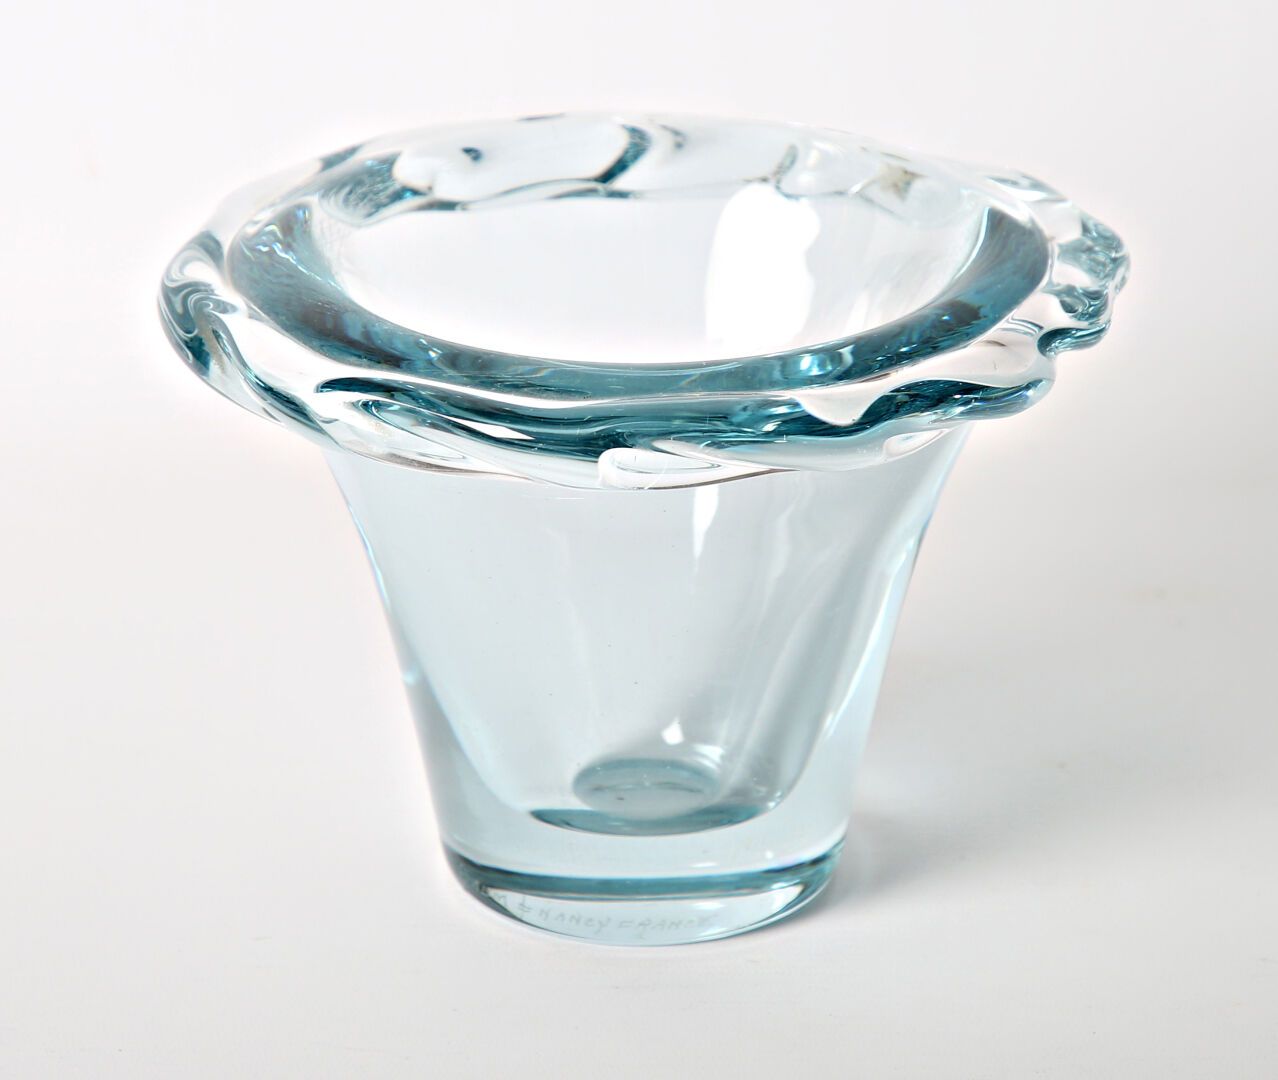 Null 达姆-南希 法国
半透明的水晶花瓶，呈喇叭状，边缘移动
鞋跟上的印记
(划痕)
高度：14厘米14 cm - 长度：19,8 cm